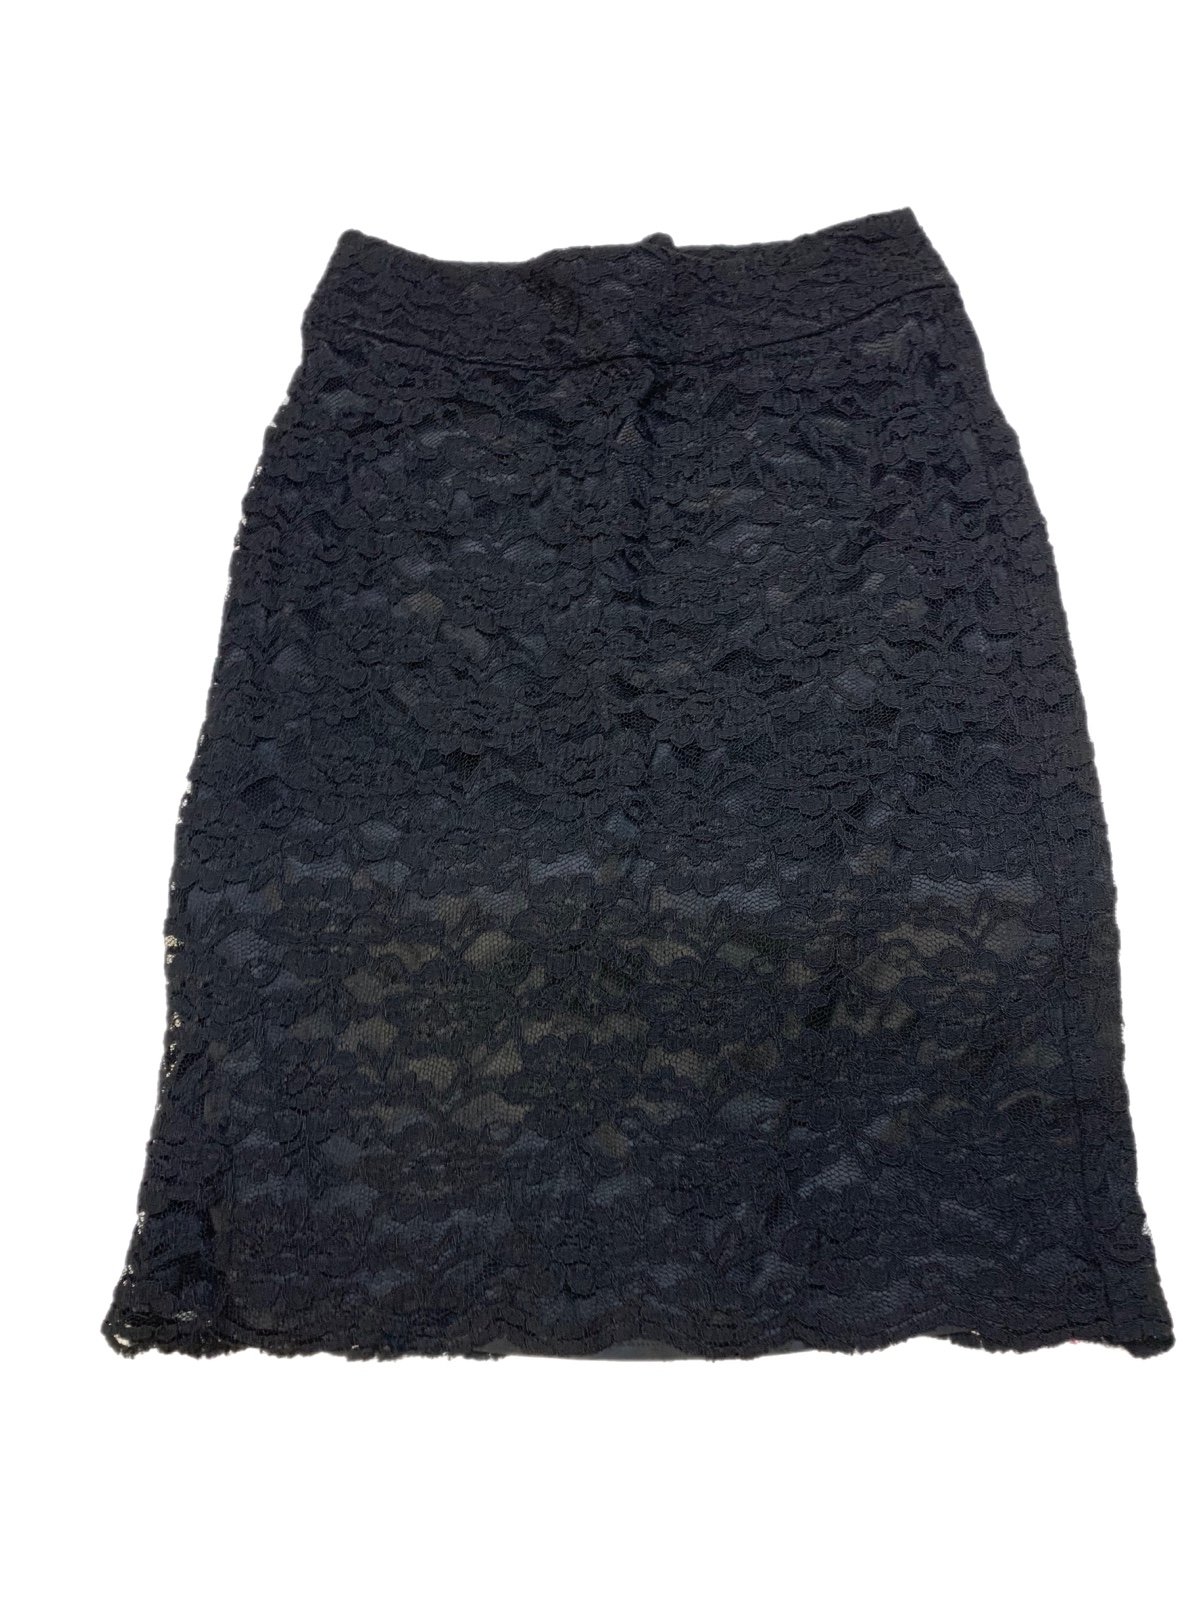 Discounted NWT Banana Republic Womens Black Lace Skirt Size 4 Mj36XJbxX Cheap